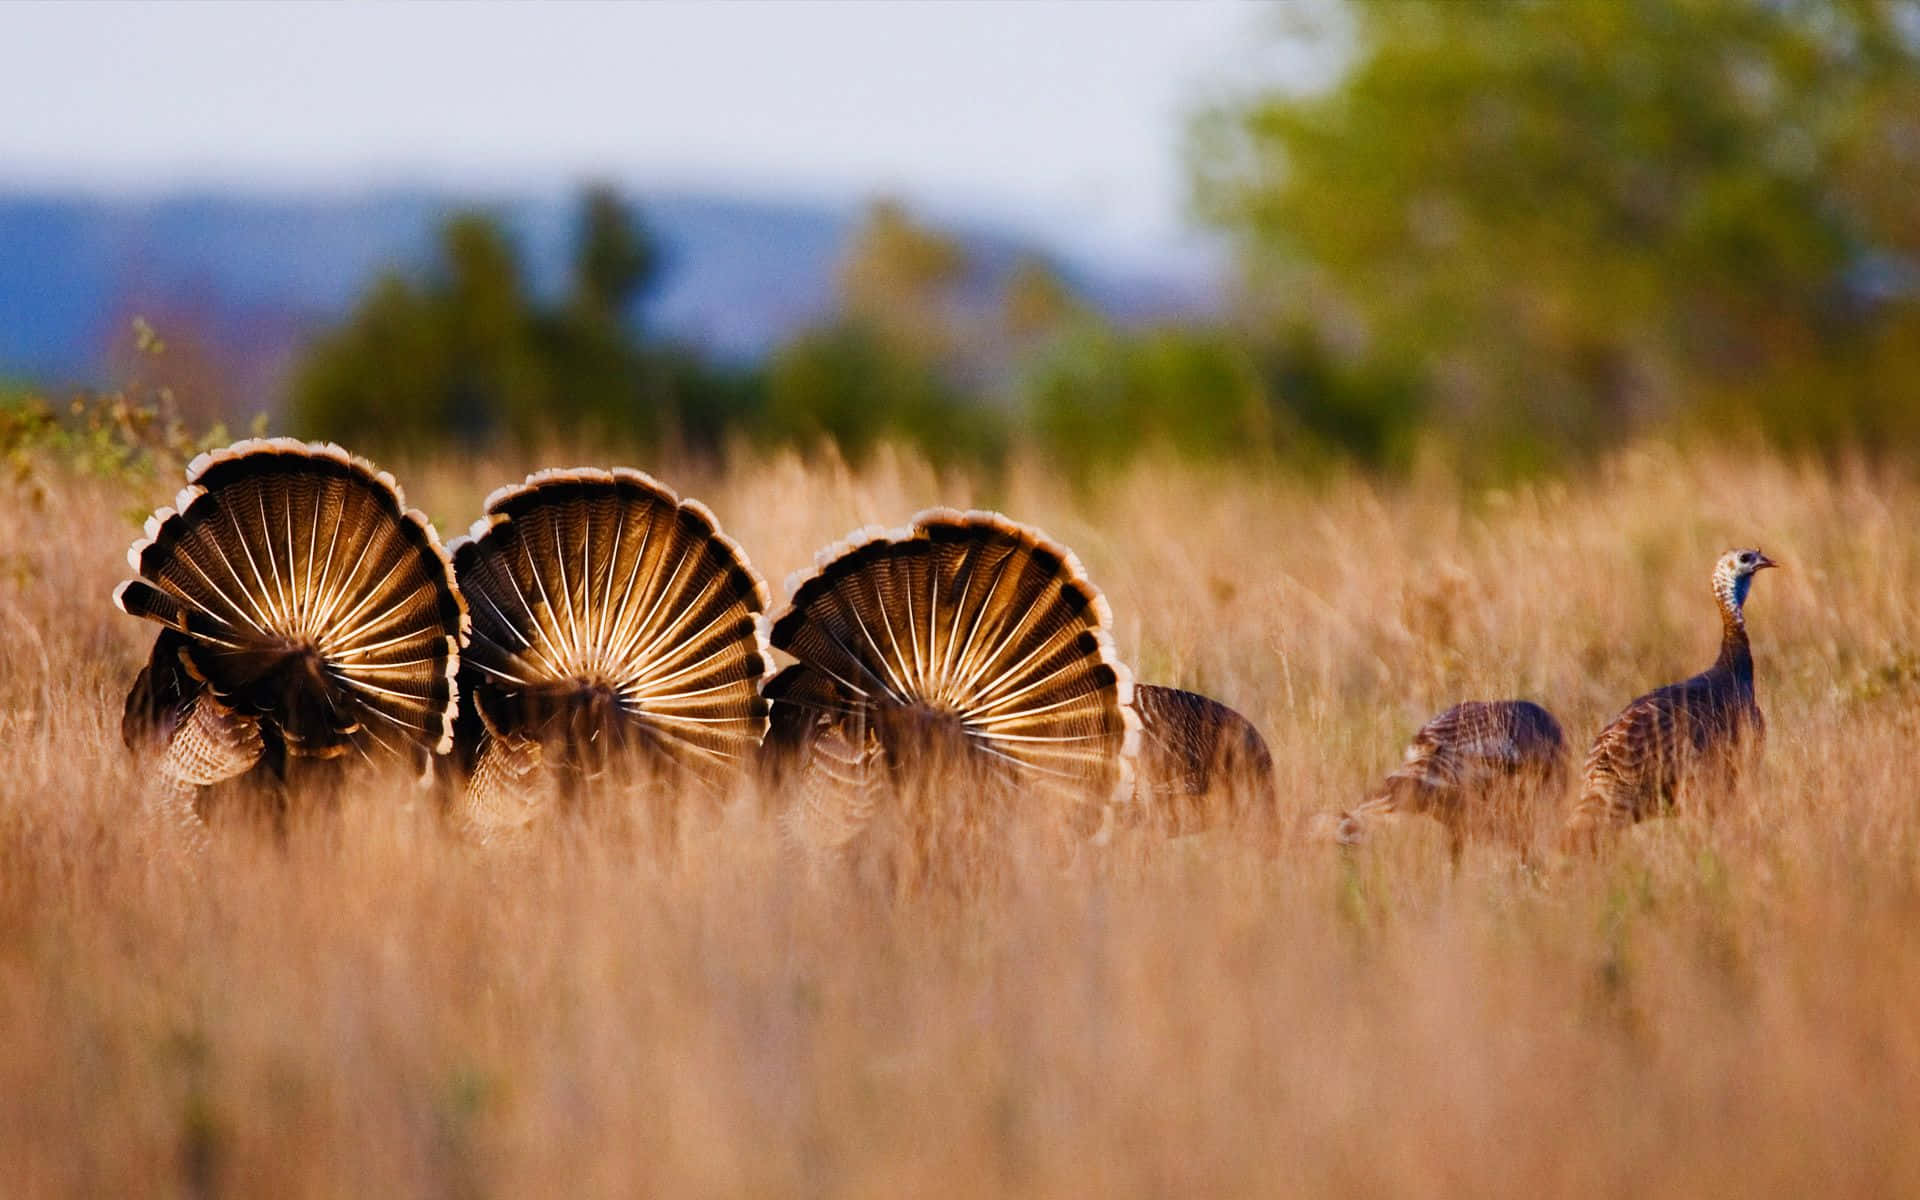 Turkeys In A Field With Tall Grass